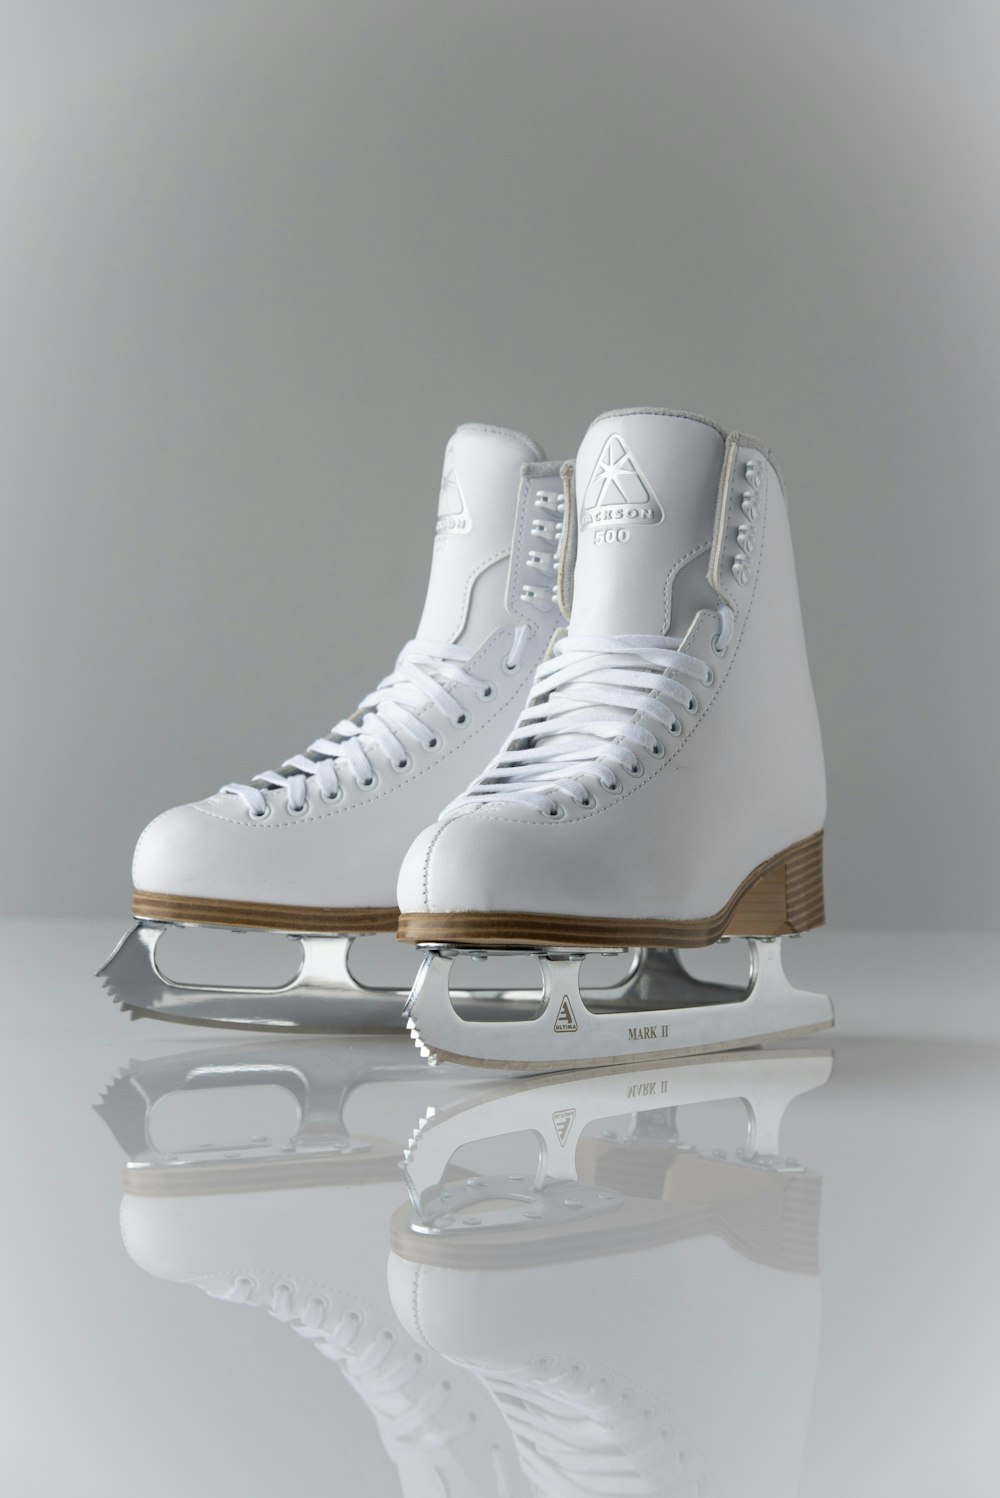 white nike air force 1 high photo – Free Ice skates Image on Unsplash